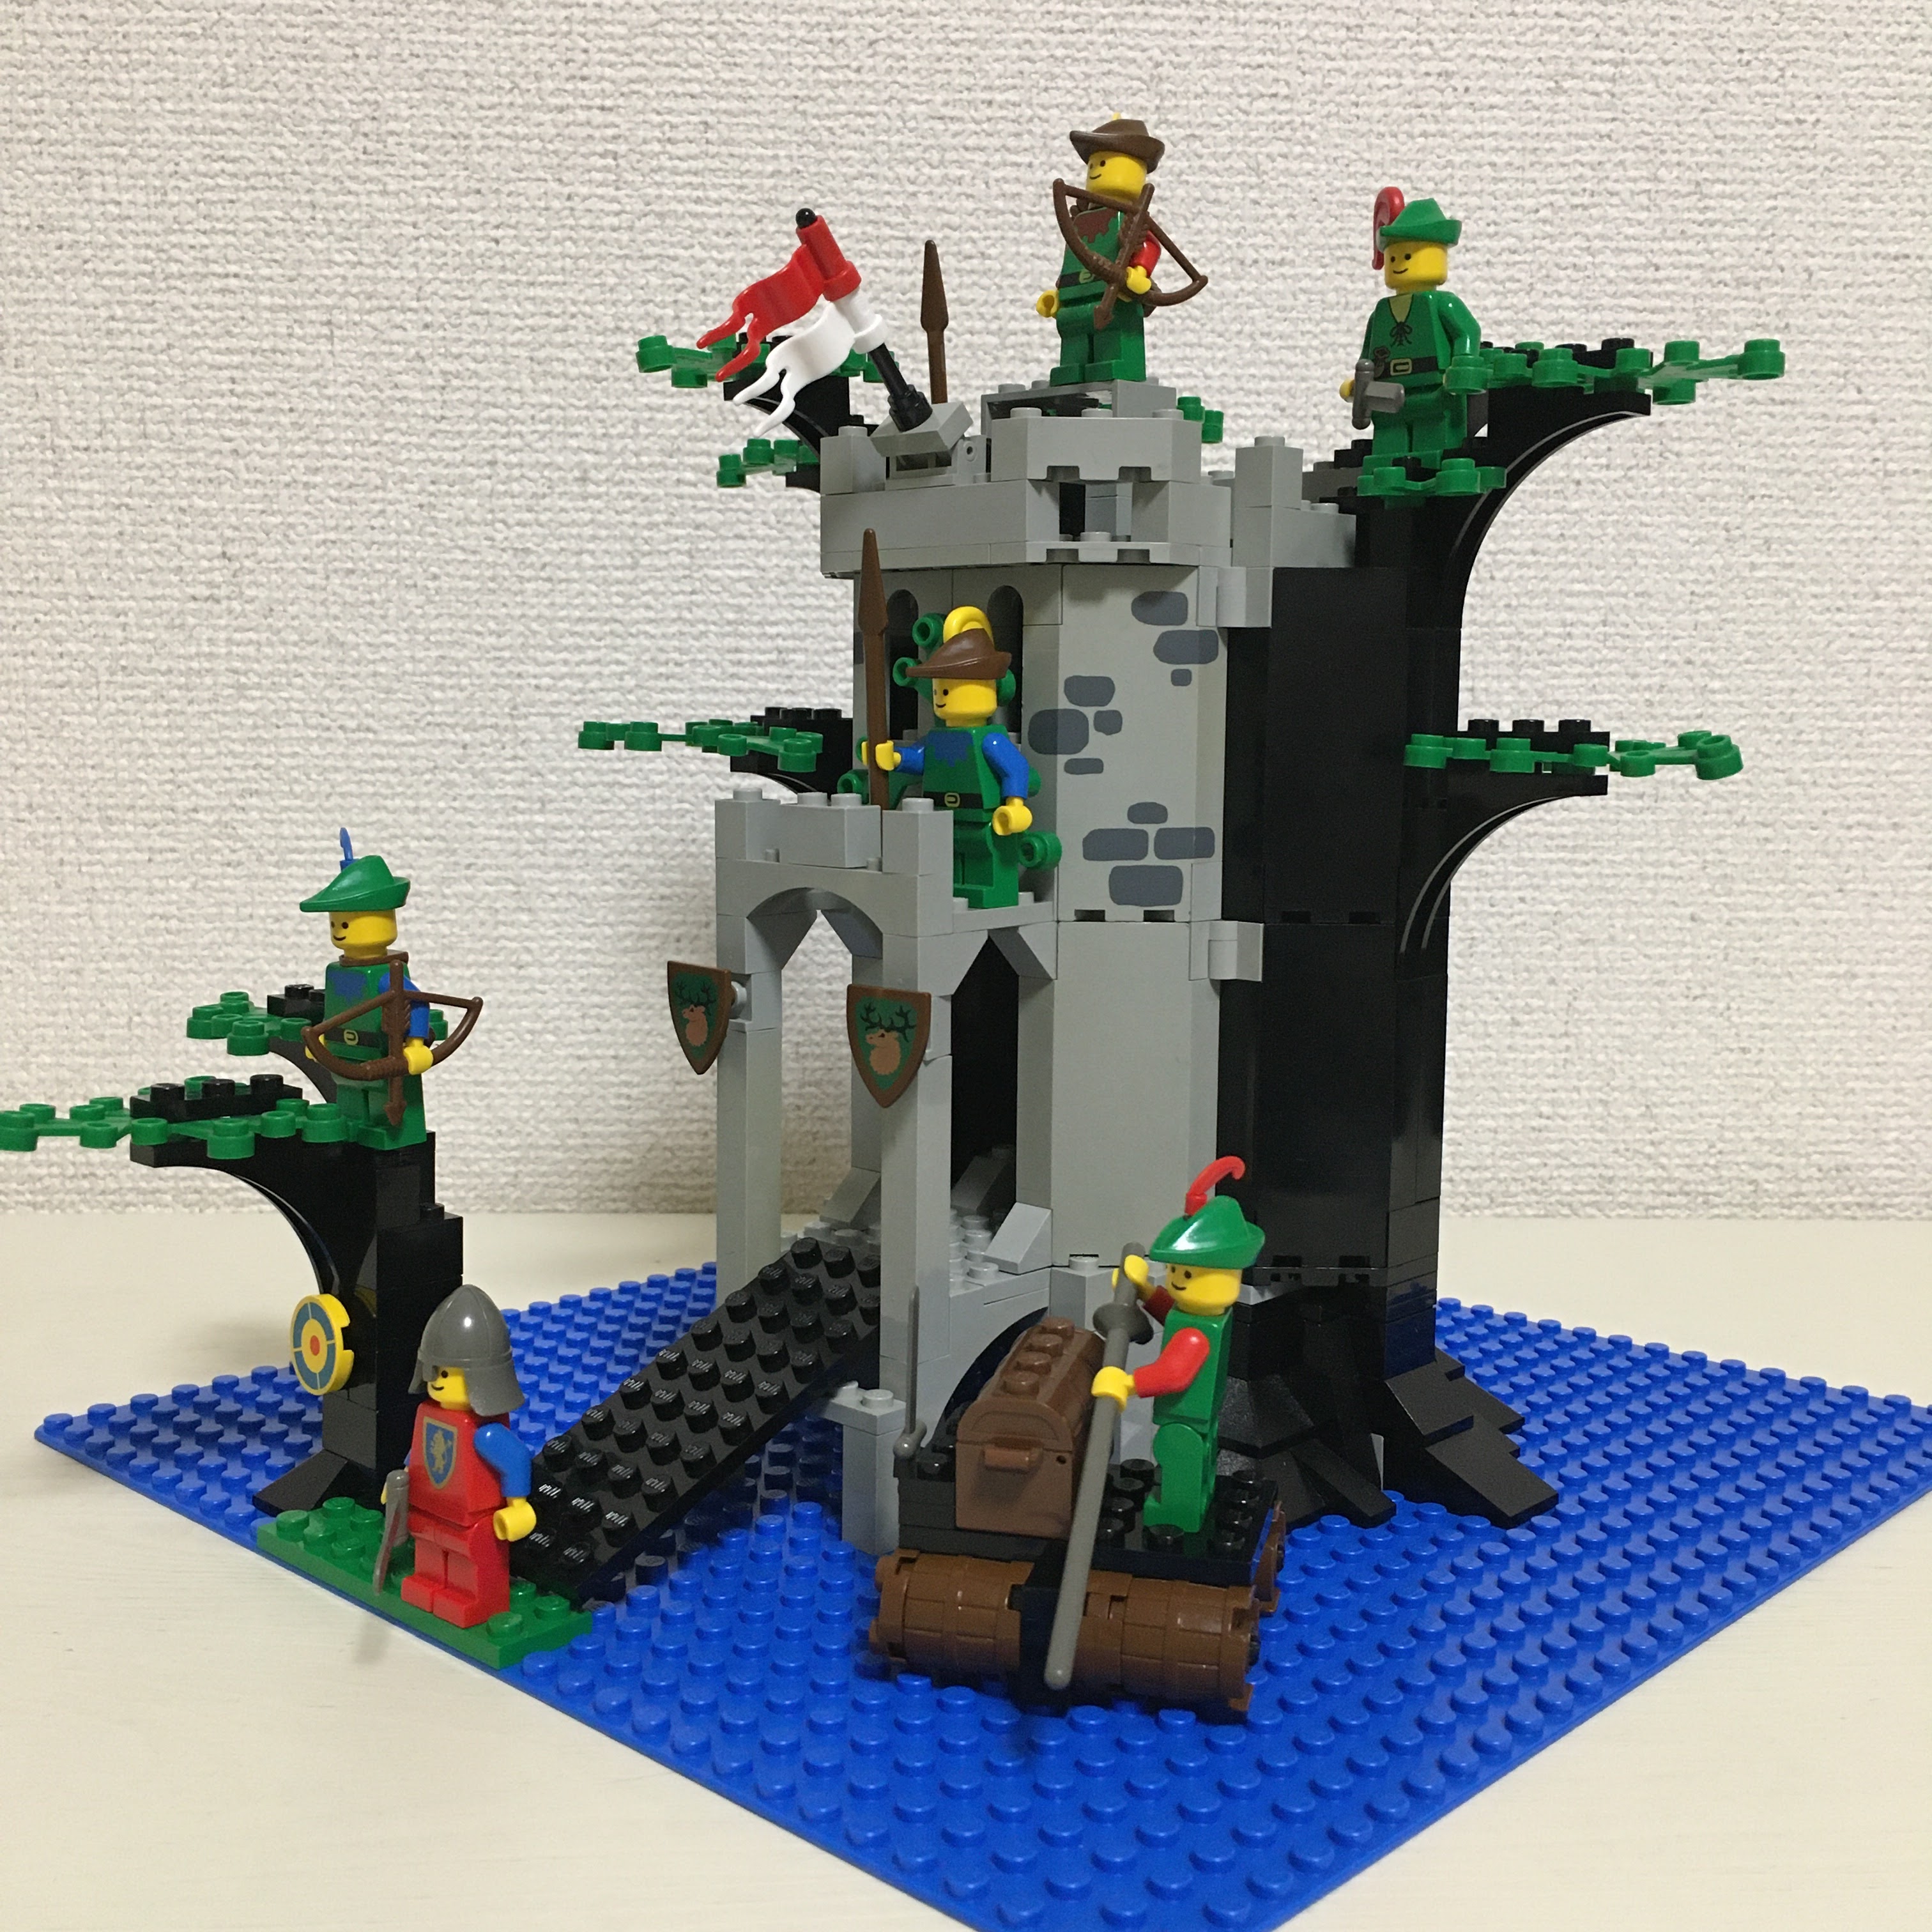 LEGO お城シリーズ 6077 森の人のとりで レビュー